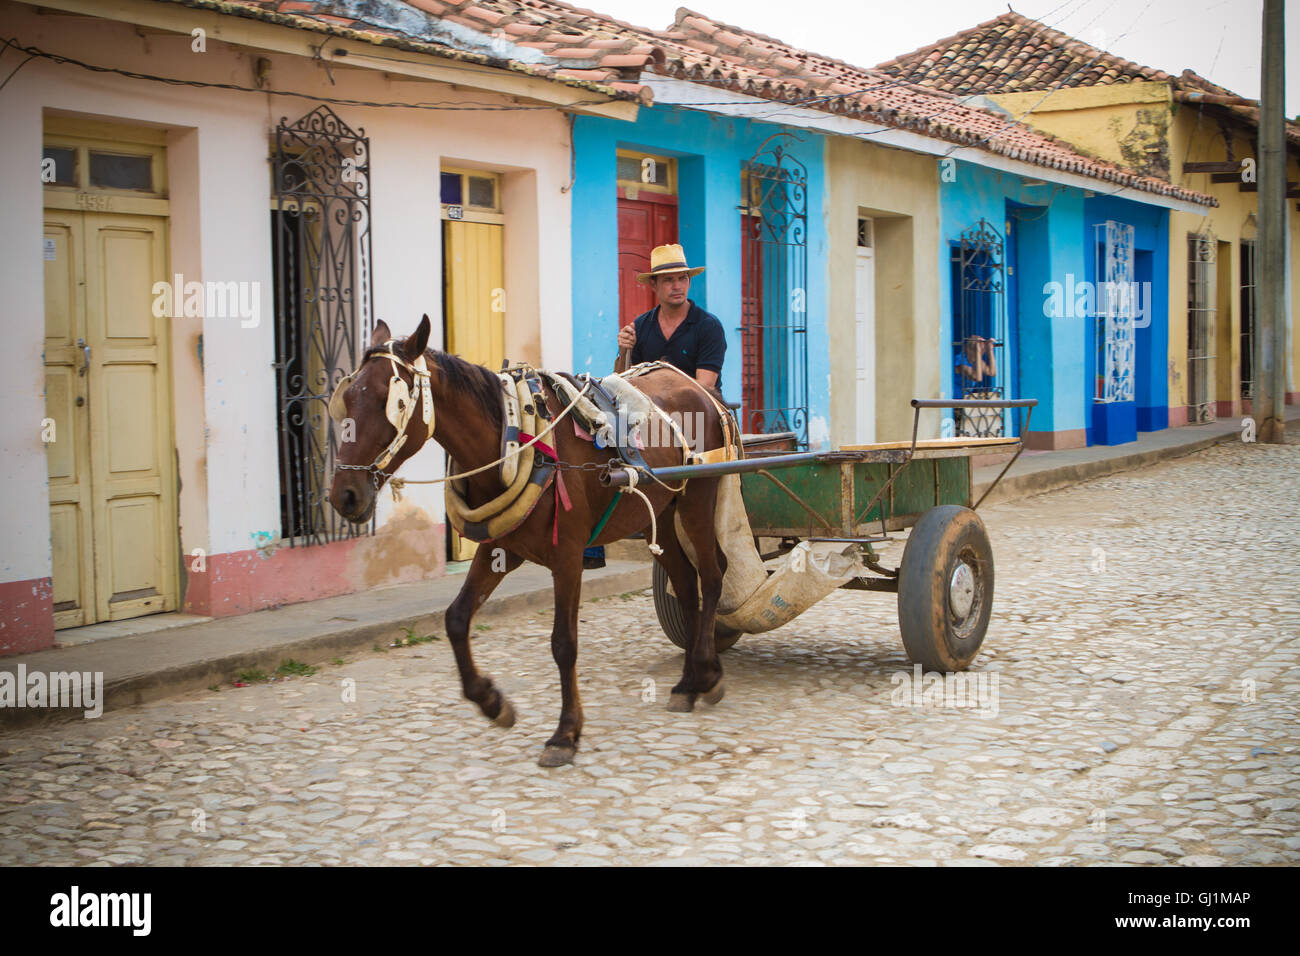 L'homme à chariot, Trinidad, Cuba, 2013 Banque D'Images